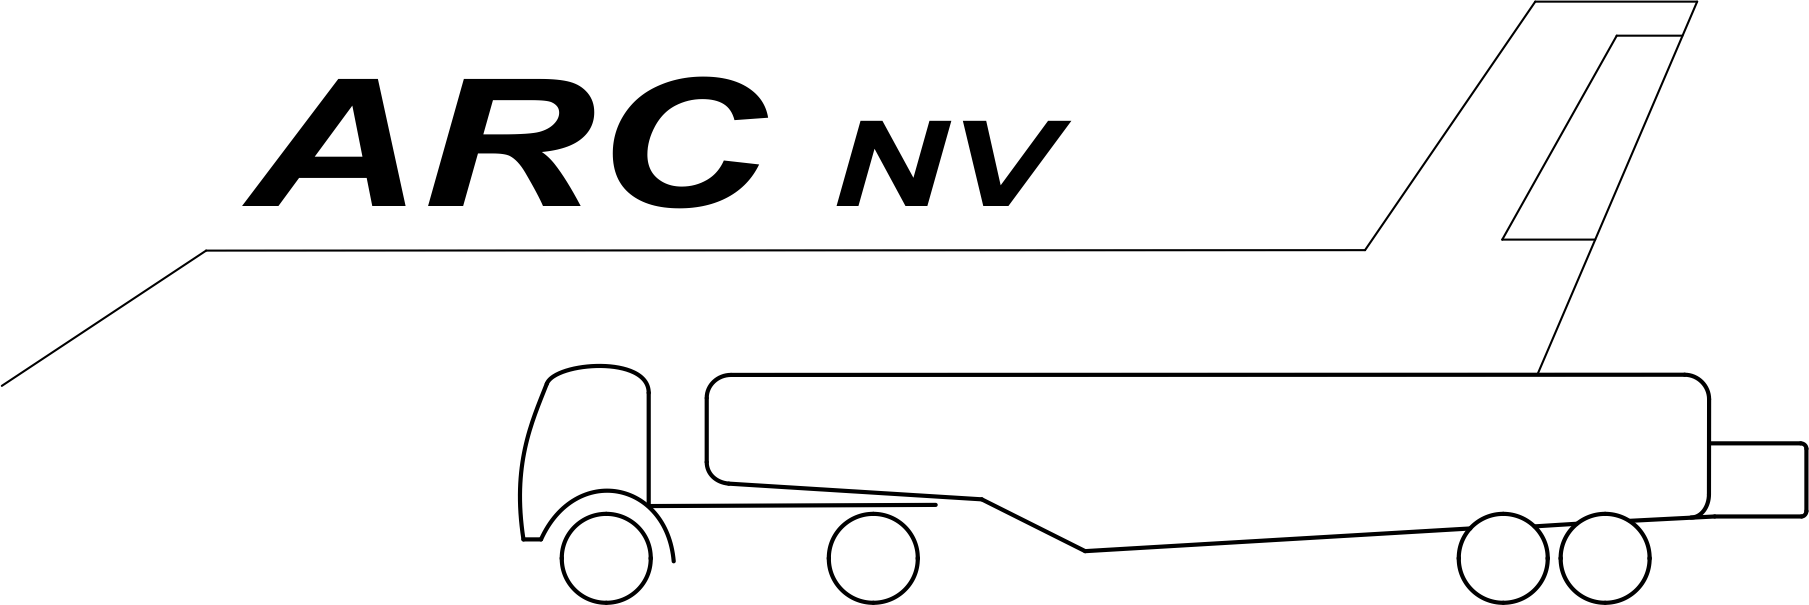 ARC Logo - Trans 2